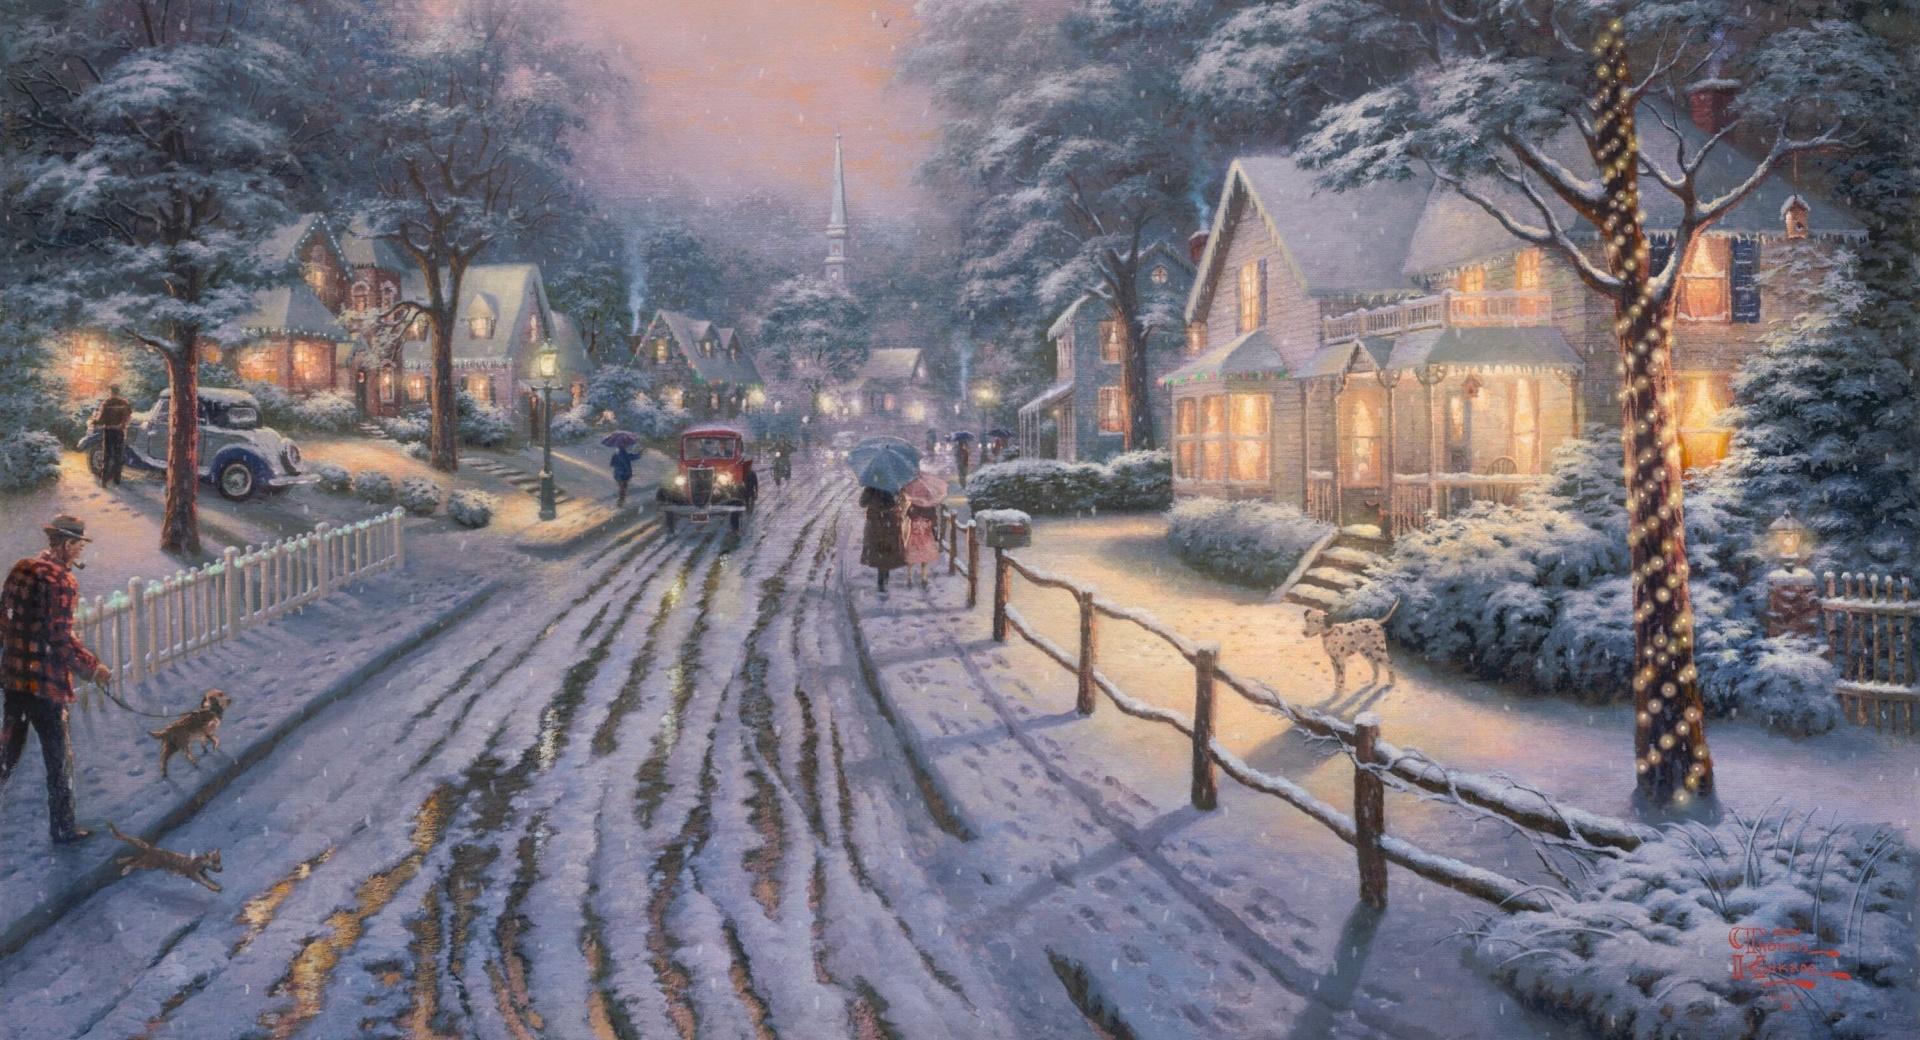 Hometown Christmas Memories by Thomas Kinkade wallpapers HD quality